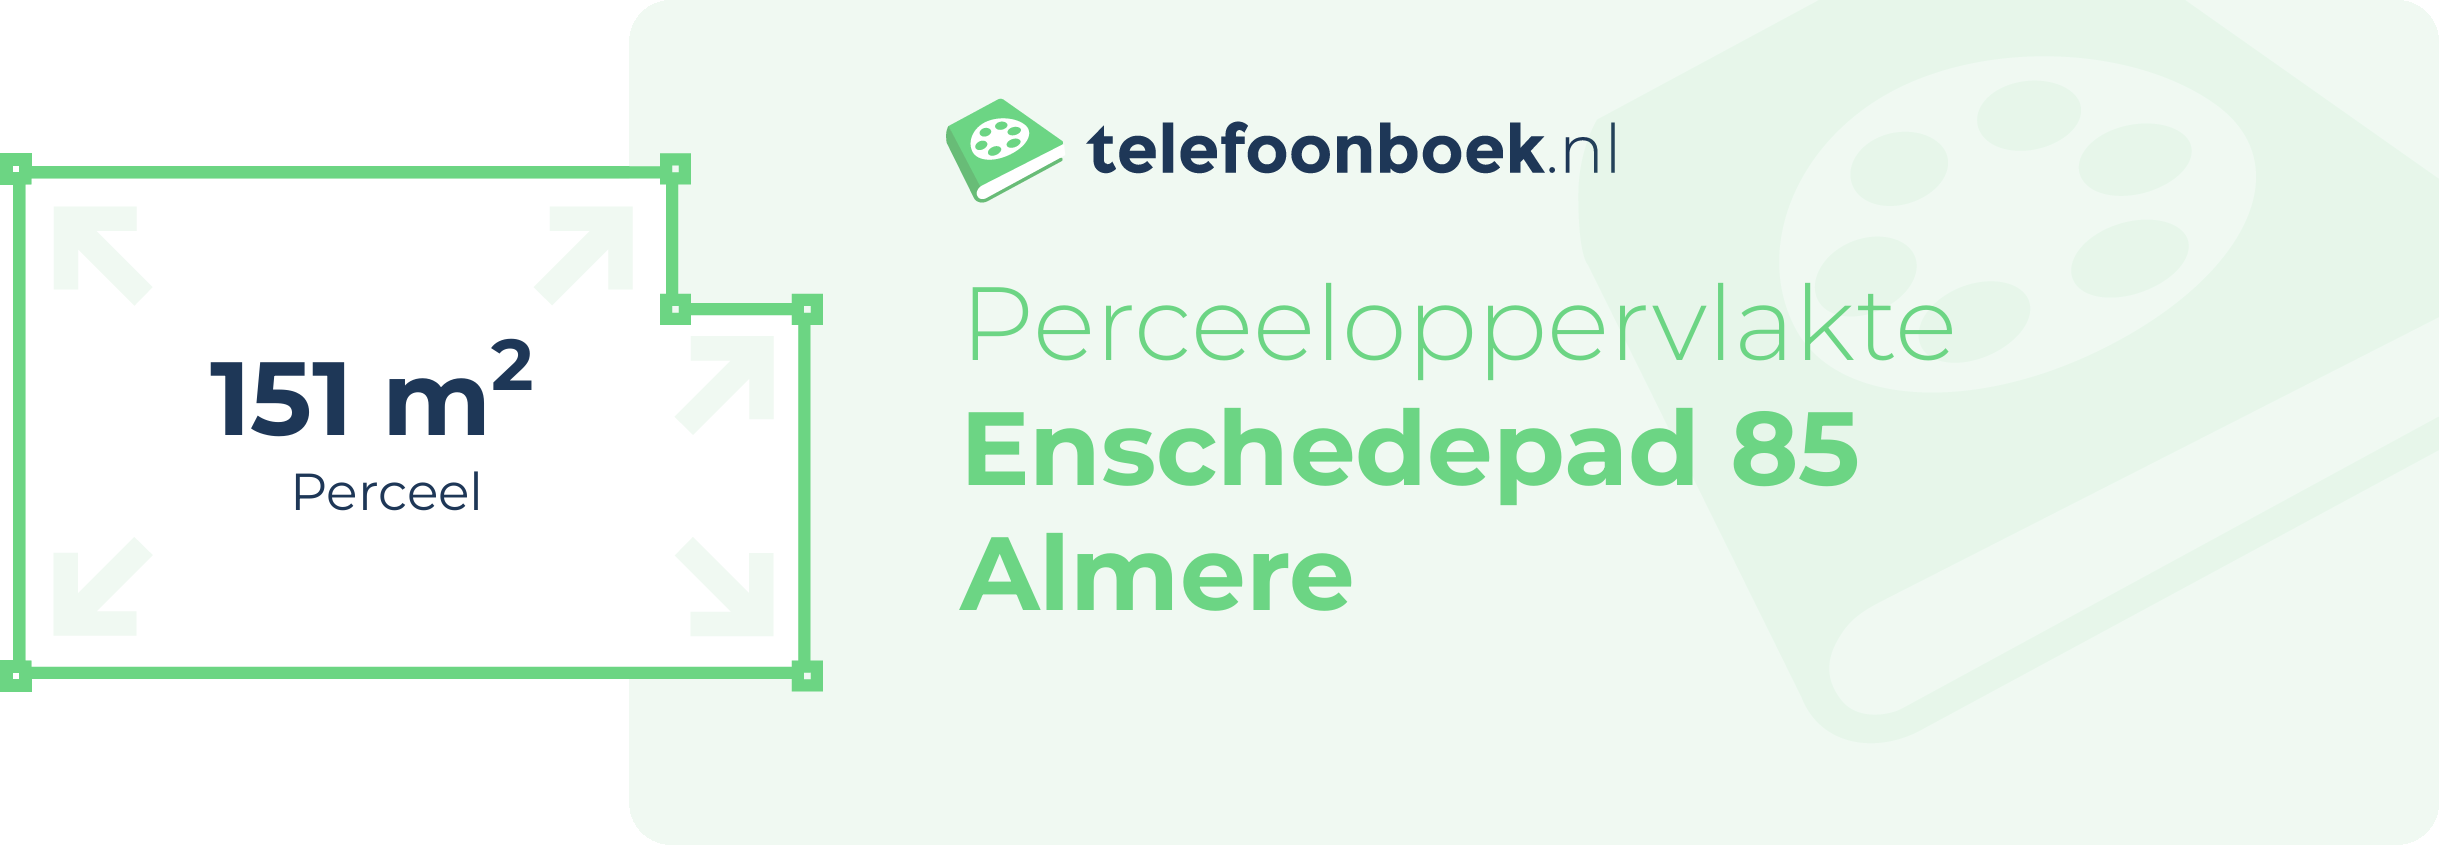 Perceeloppervlakte Enschedepad 85 Almere